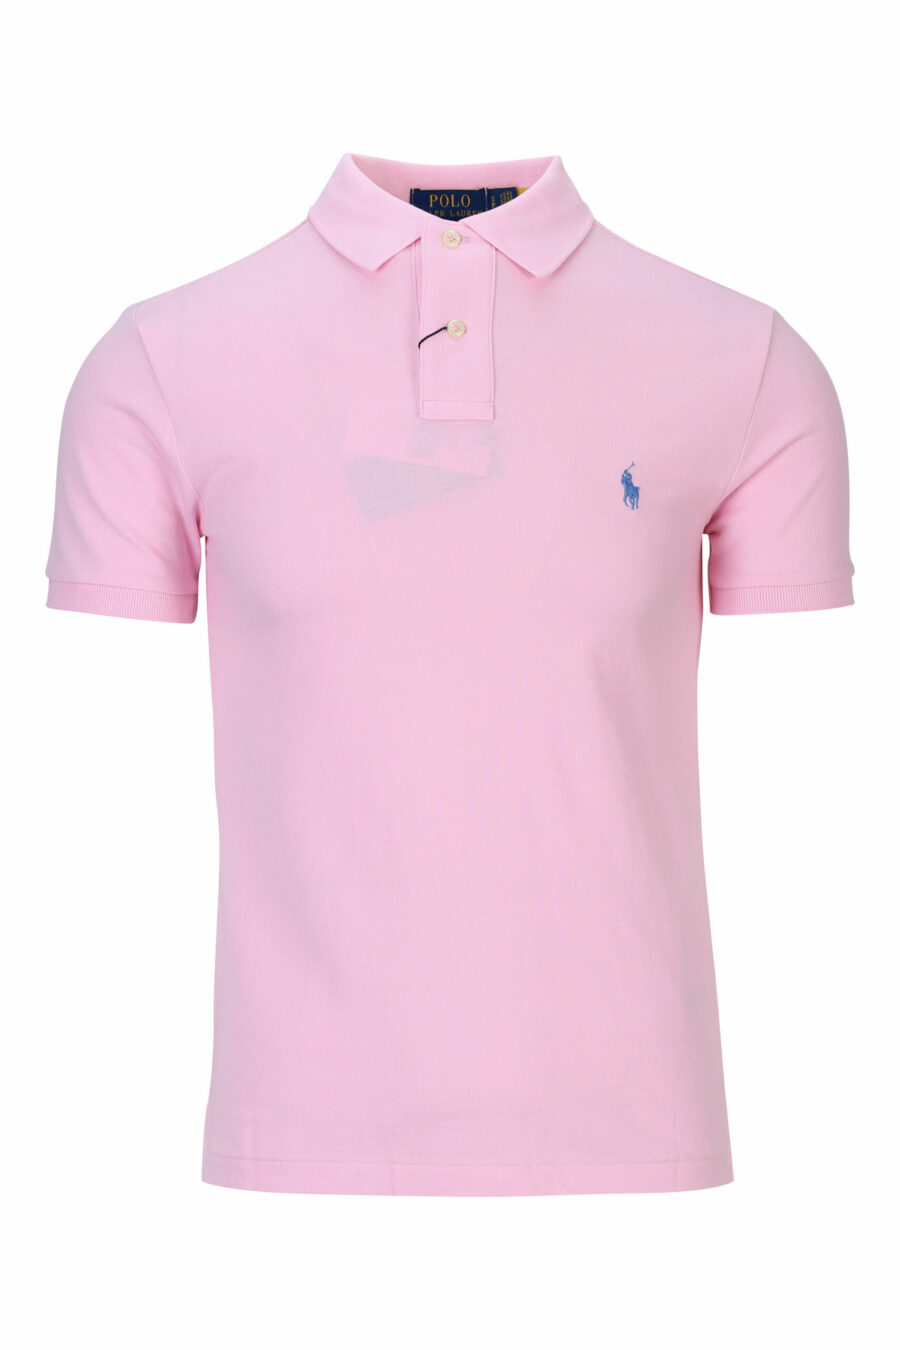 Pólo cor-de-rosa com mini-logotipo "polo" - 3615739771649